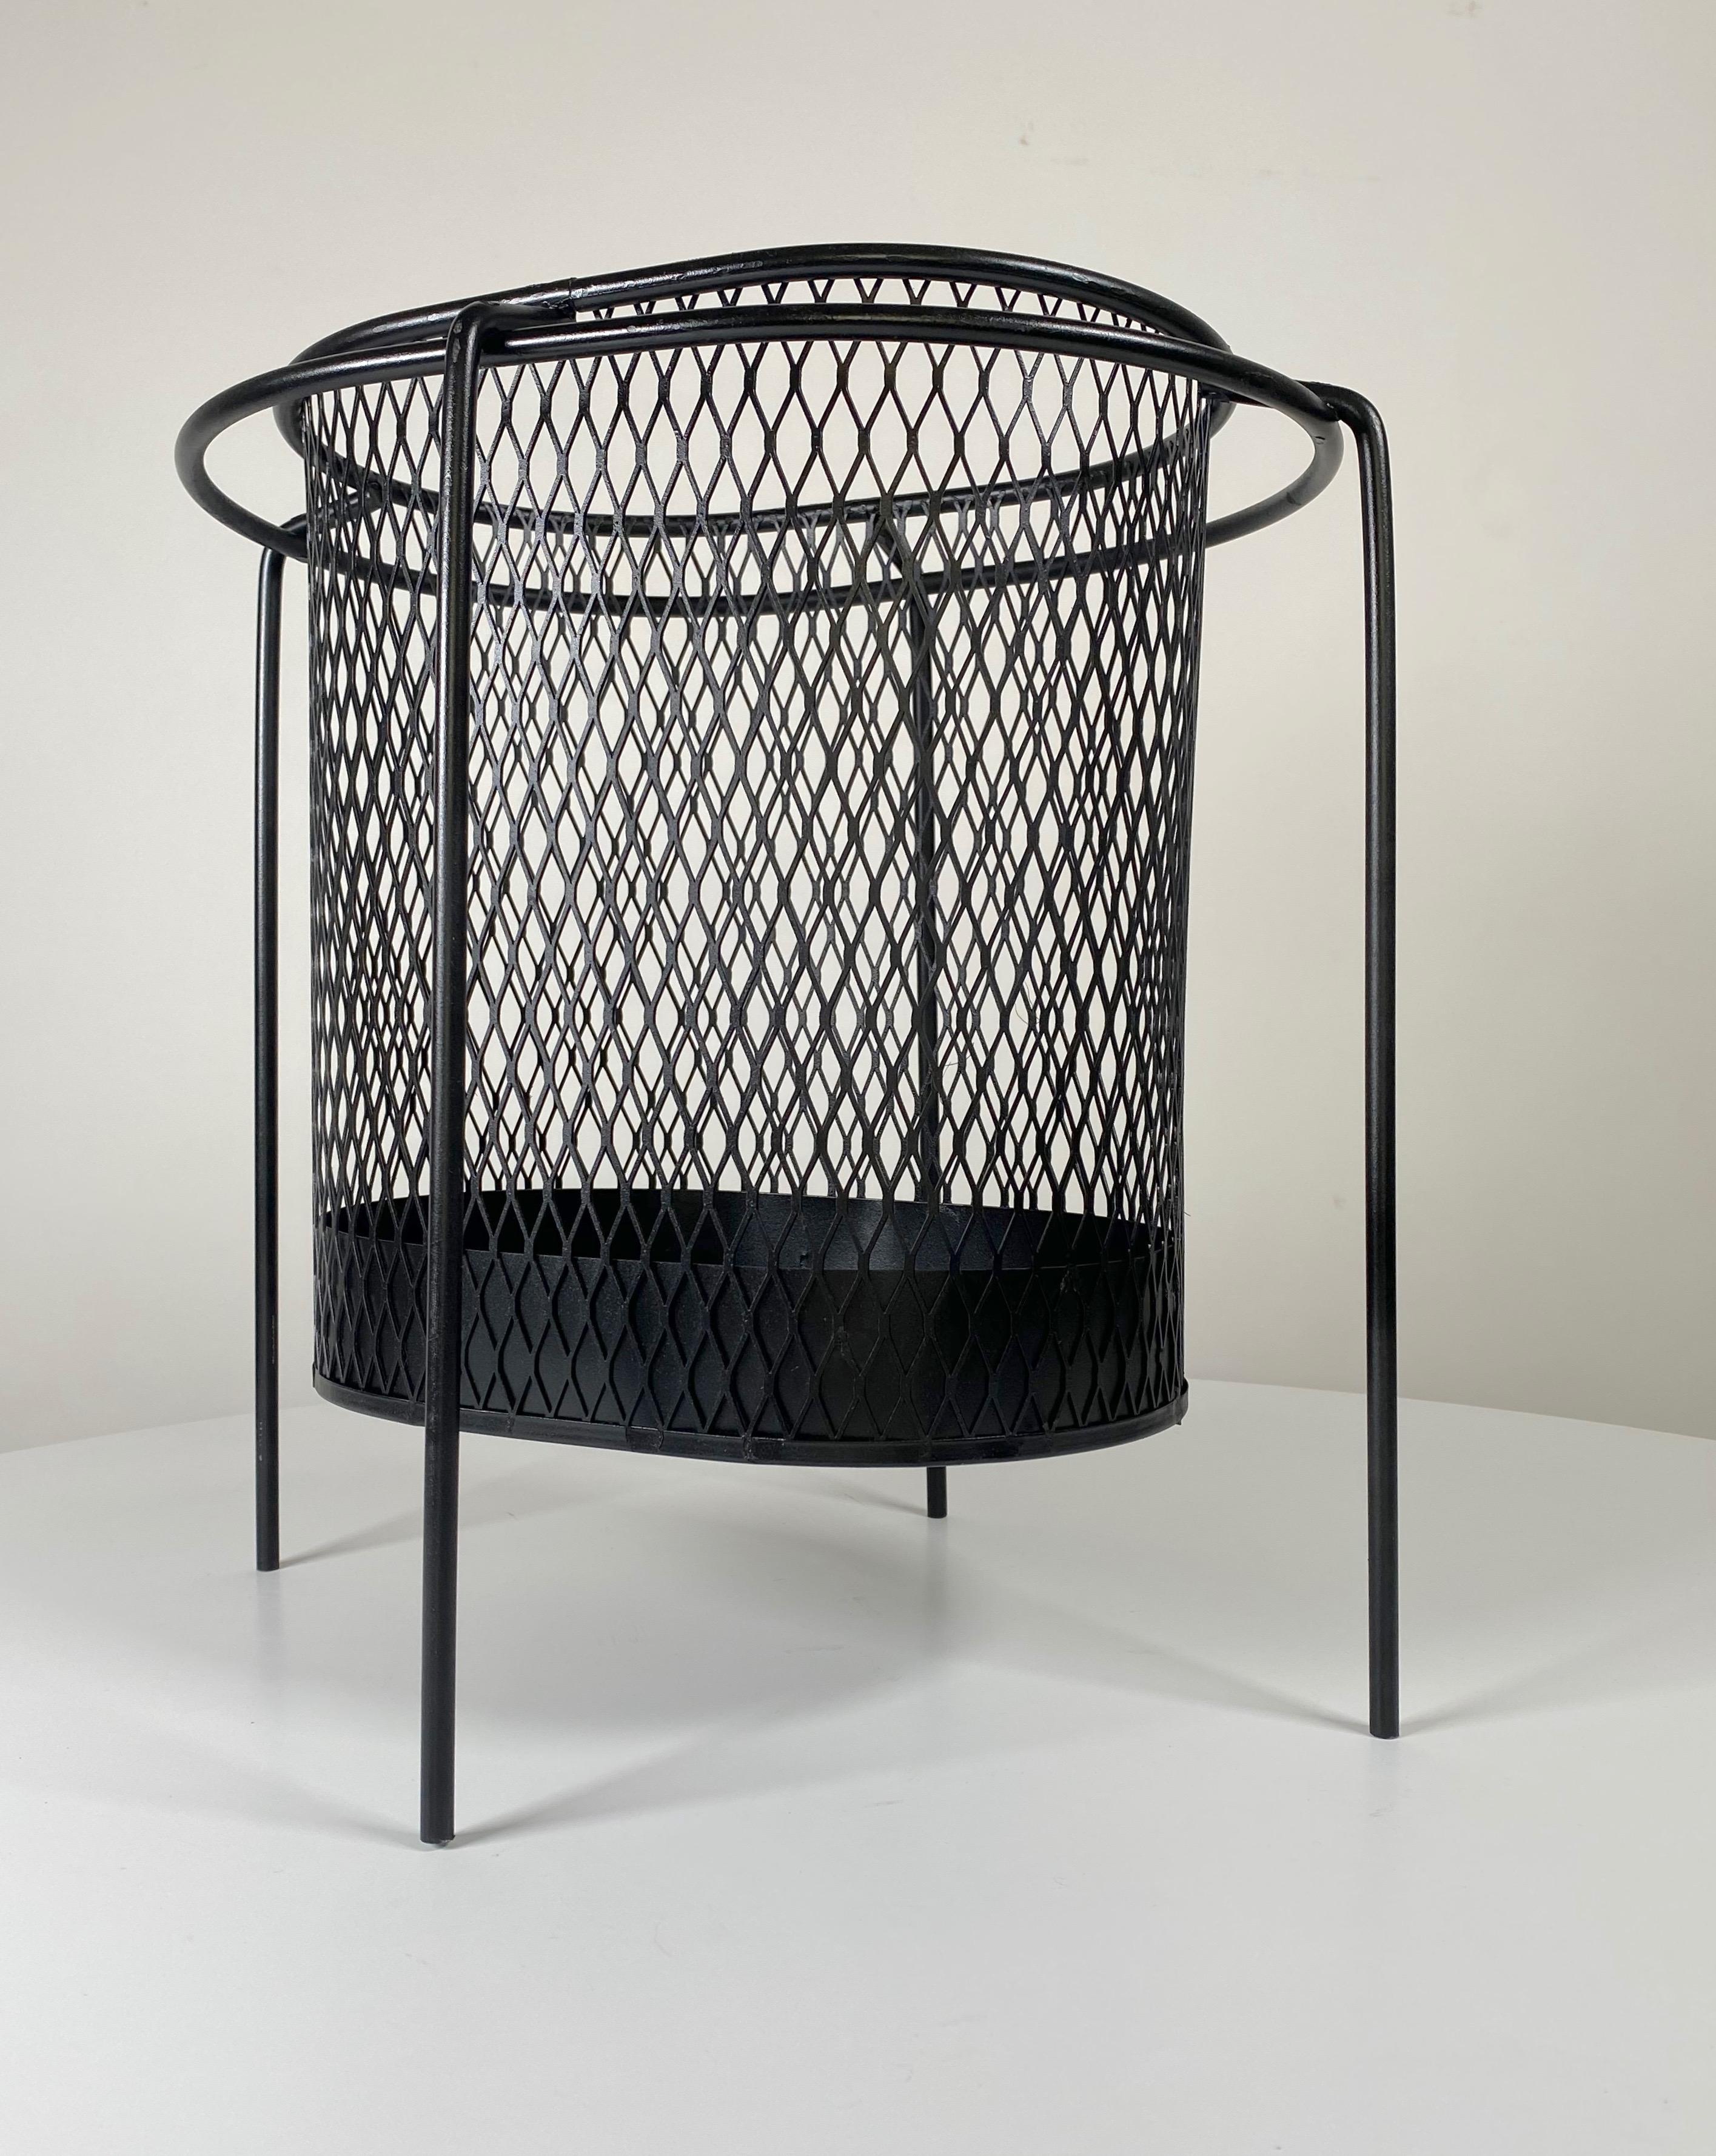 Machine-Made Maurice Duchin Expanded Wastepaper Basket Modernist 1950s Design